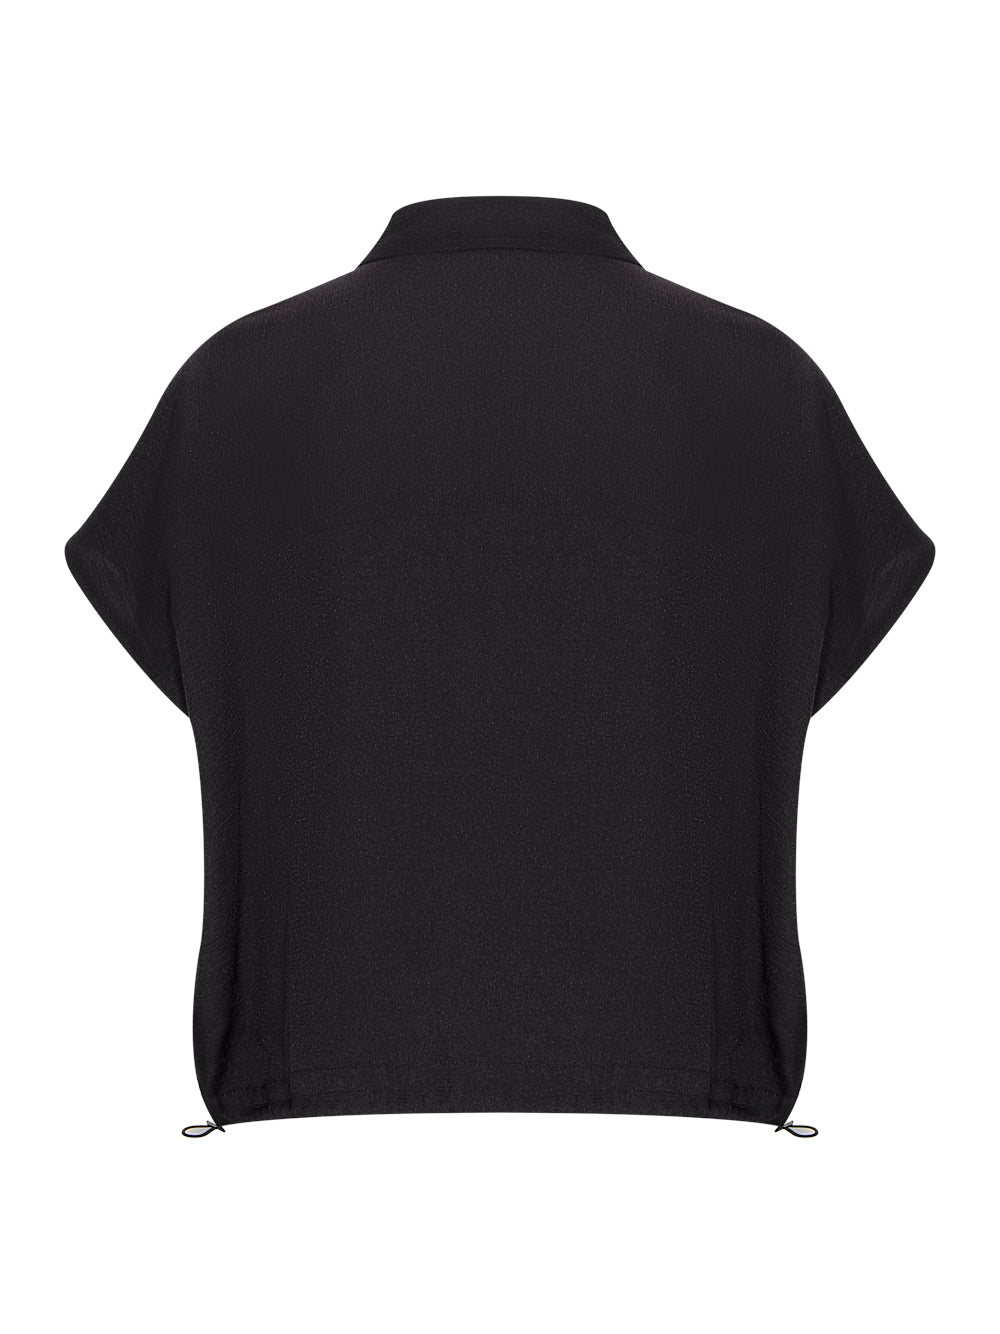 Short Sleeve Drawstring Shirt (Black)